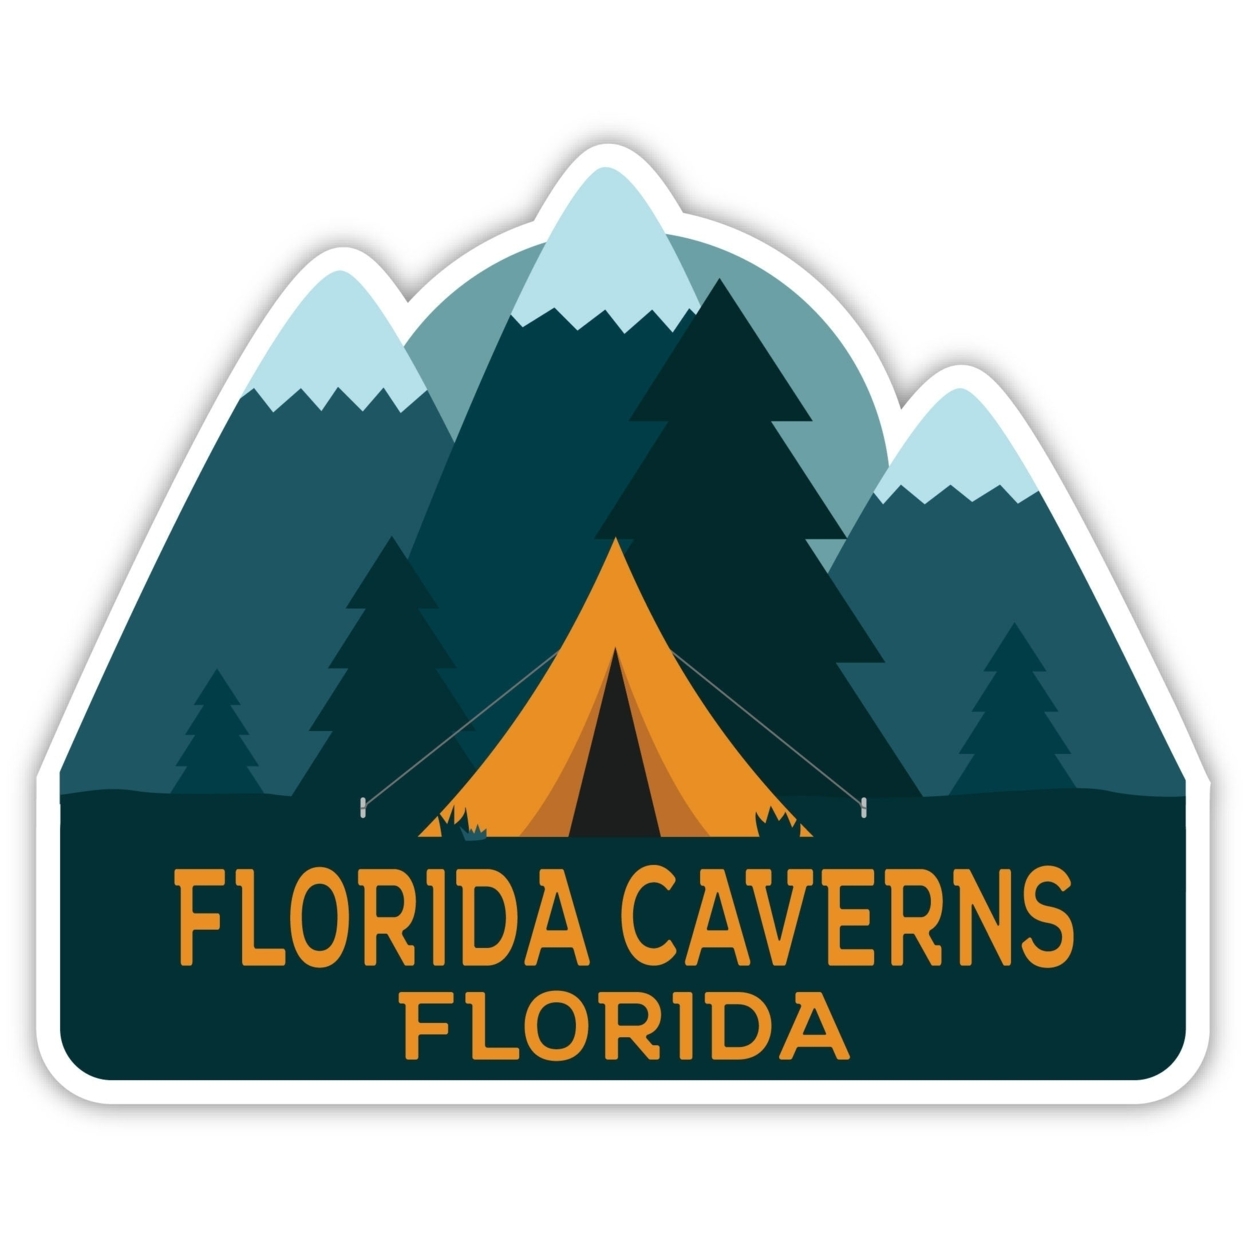 Florida Caverns Florida Souvenir Decorative Stickers (Choose Theme And Size) - 4-Pack, 8-Inch, Tent